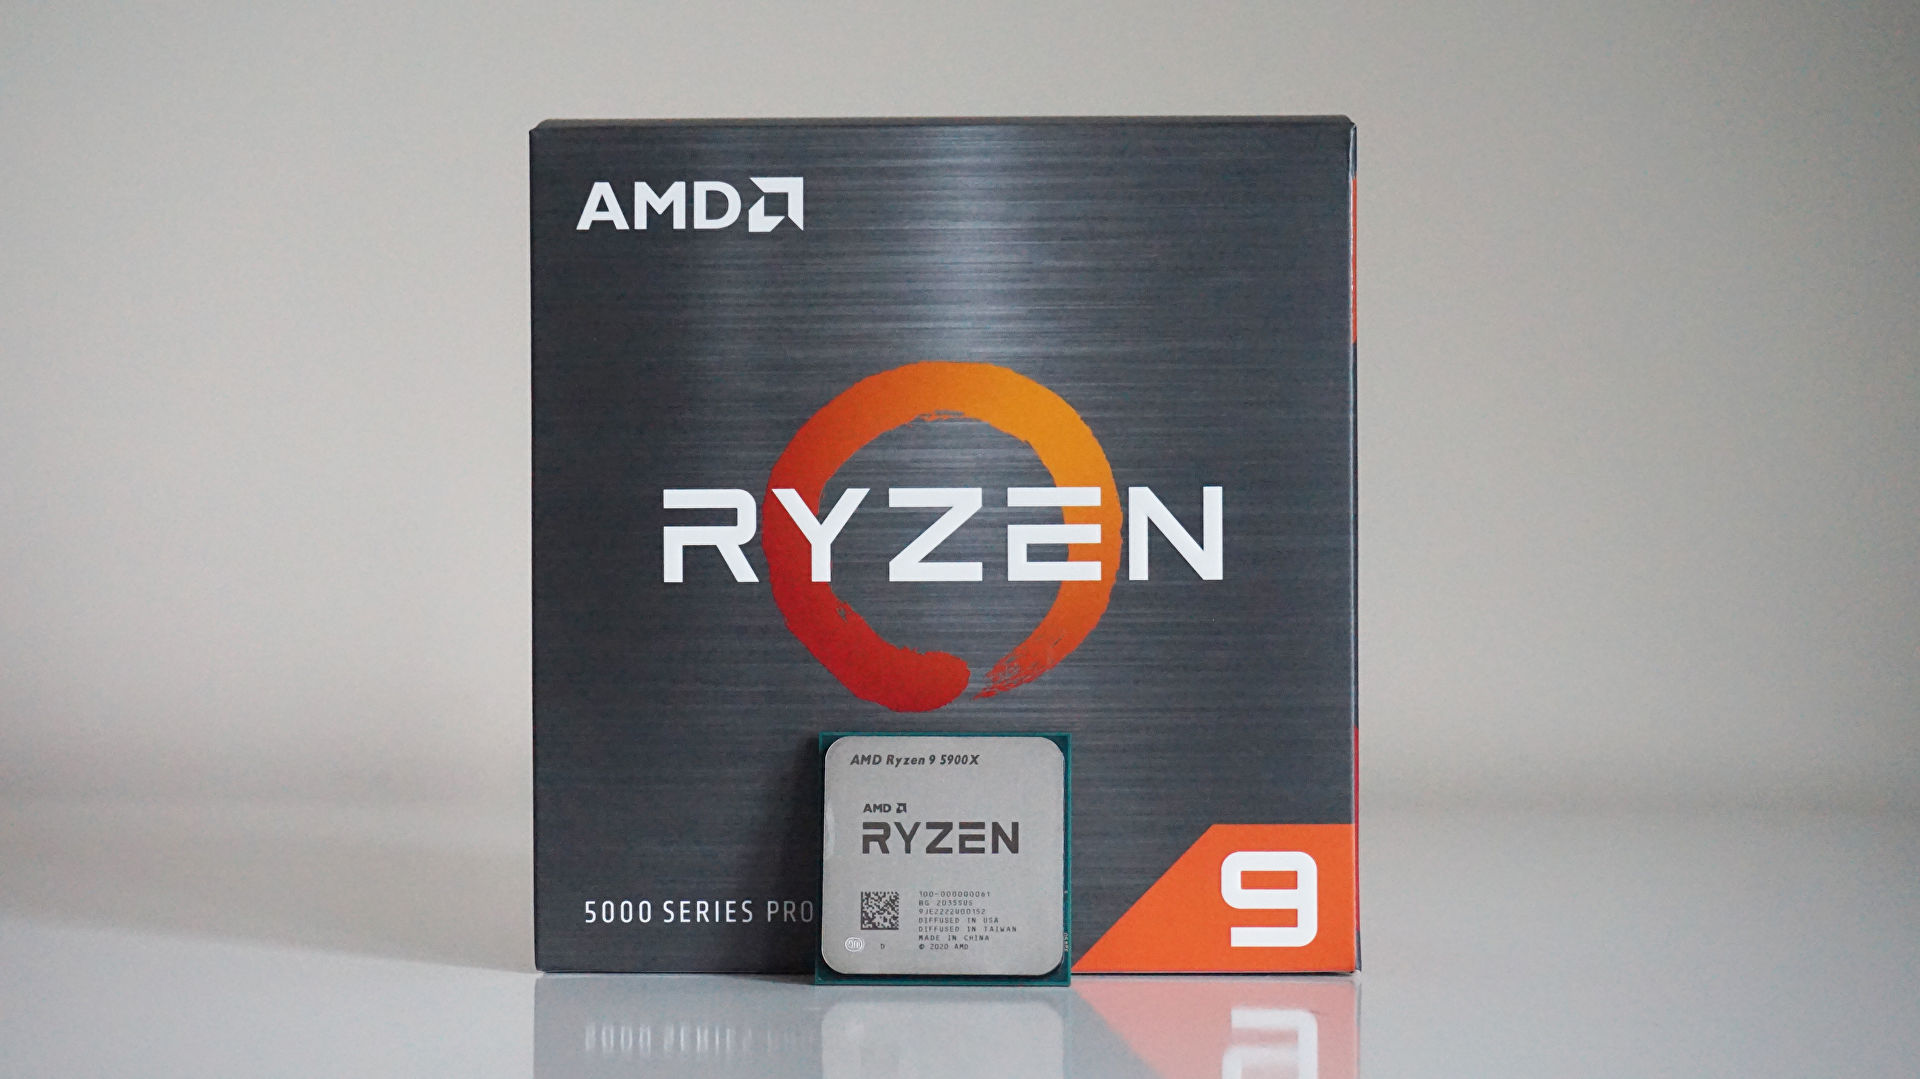 پردازنده AMD Ryzen 9 5900X